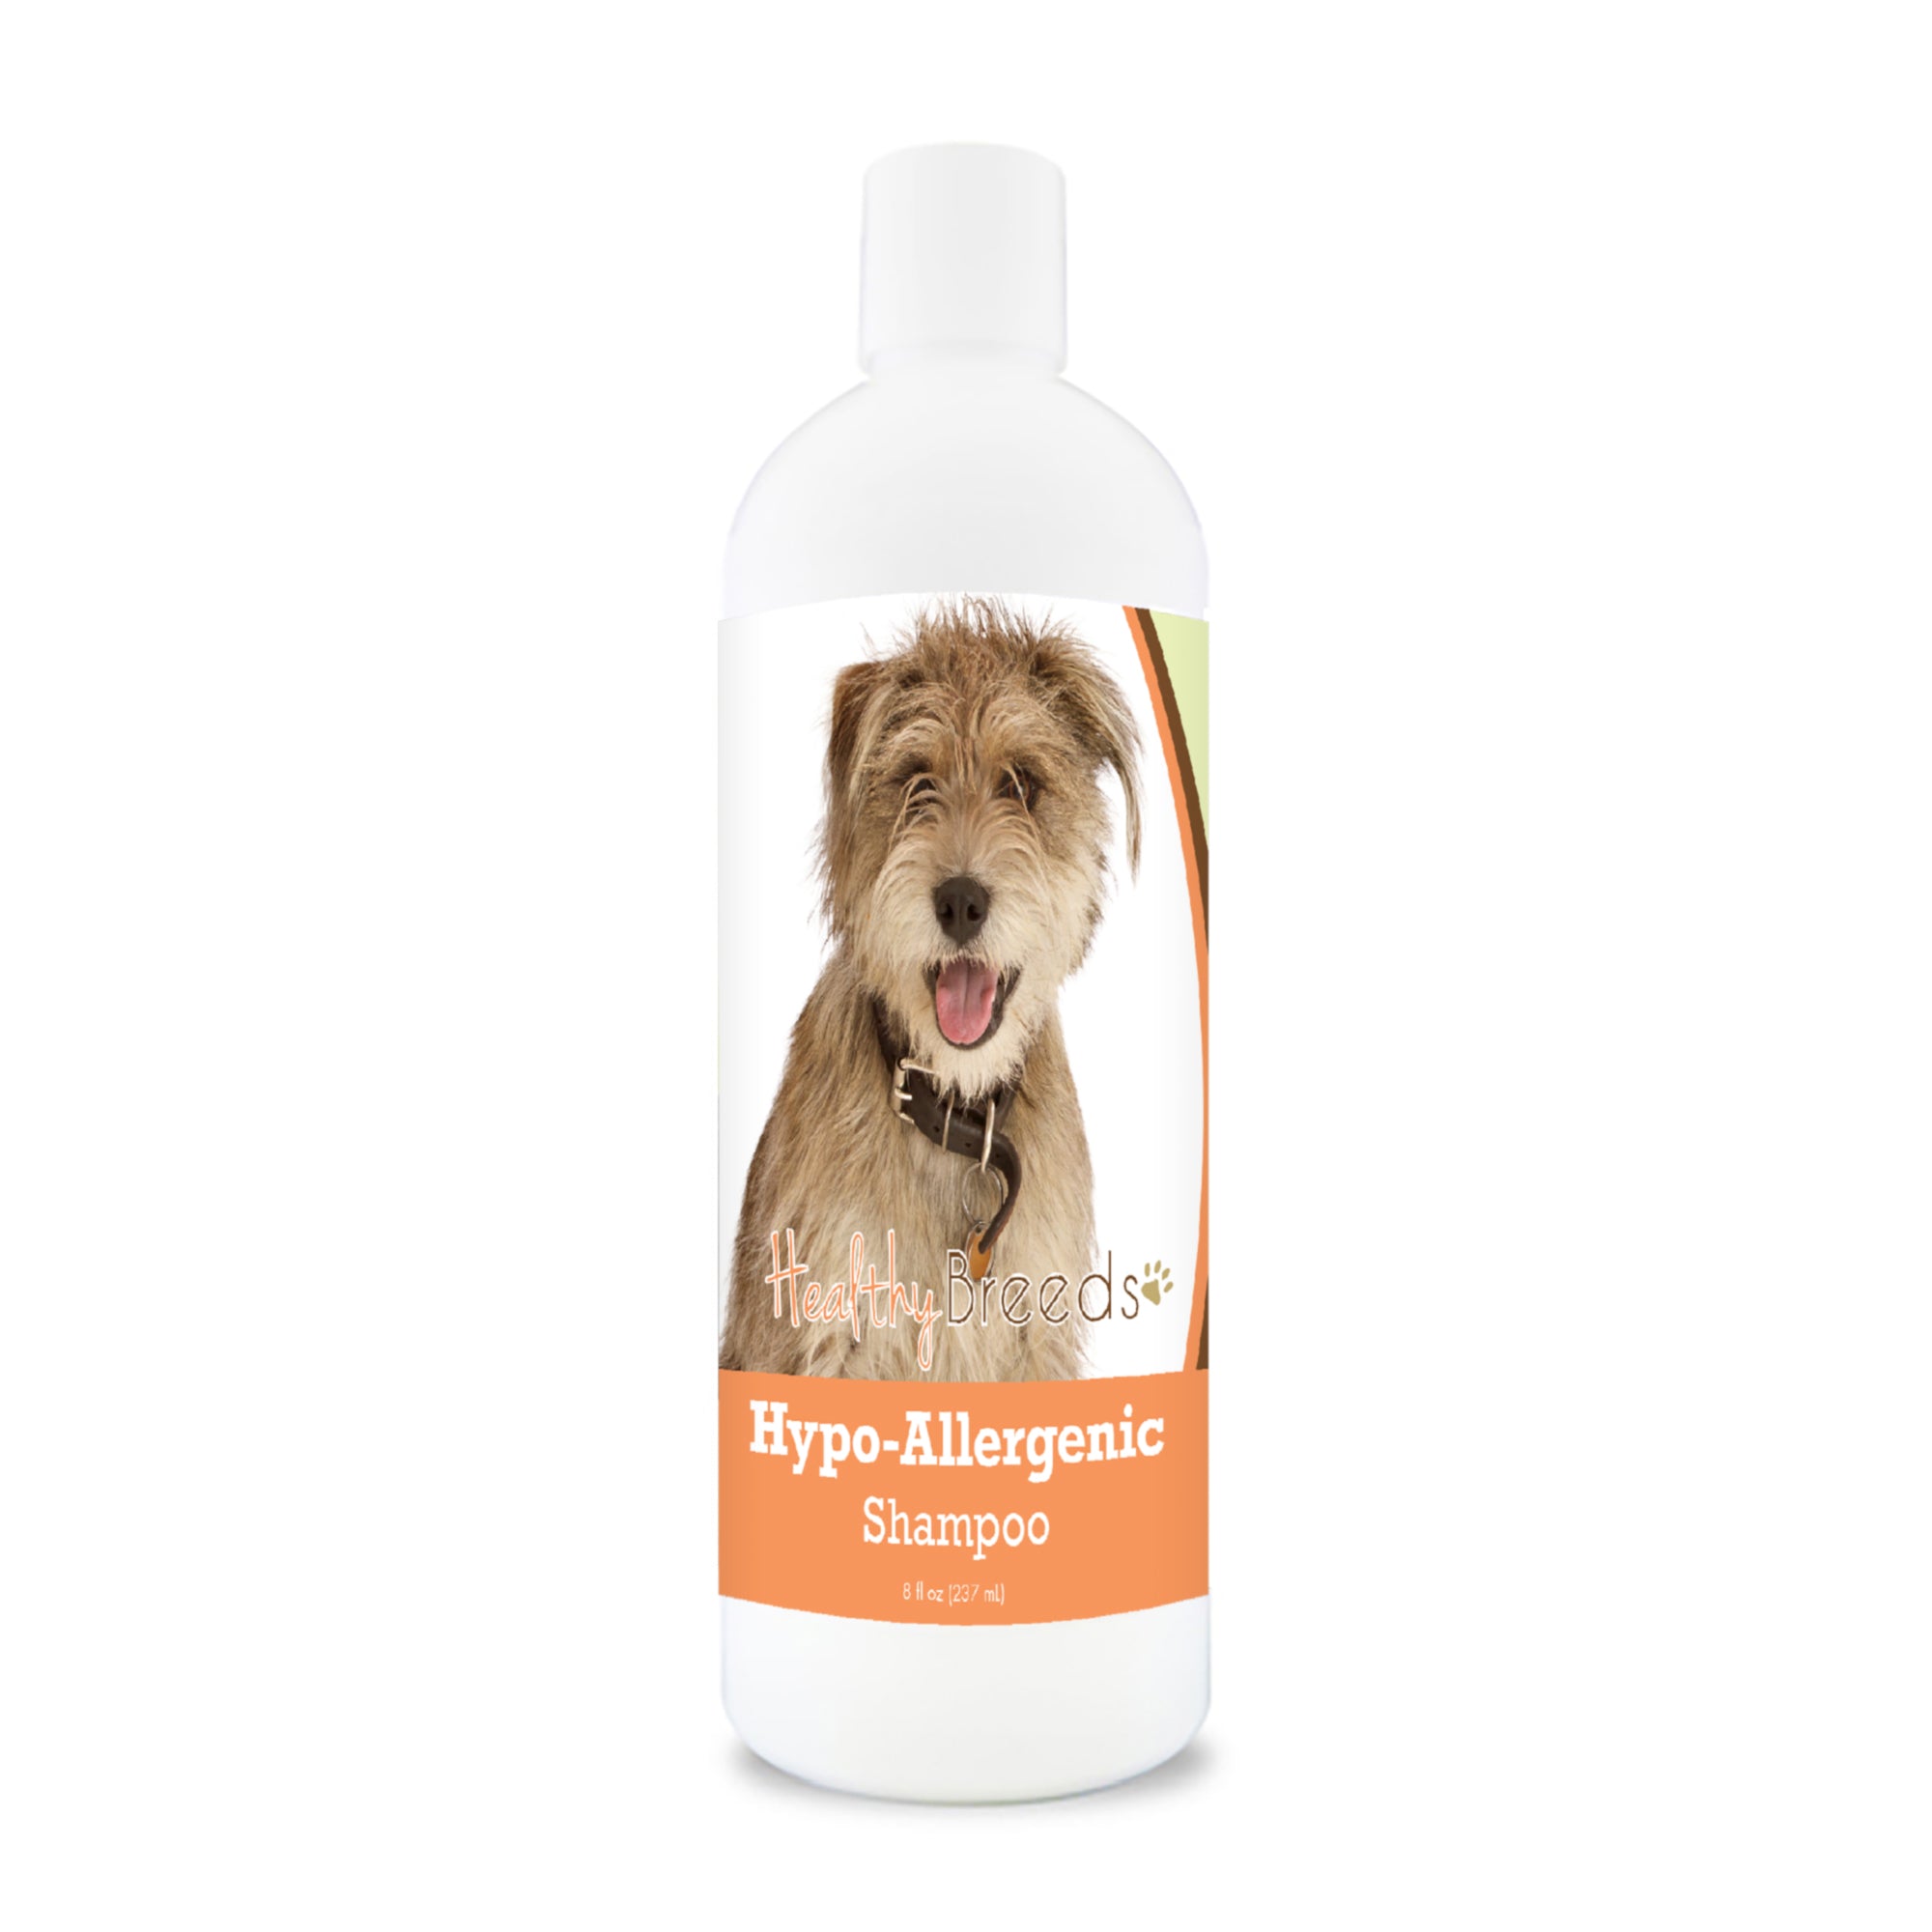 Mutt Hypo-Allergenic Shampoo 8 oz